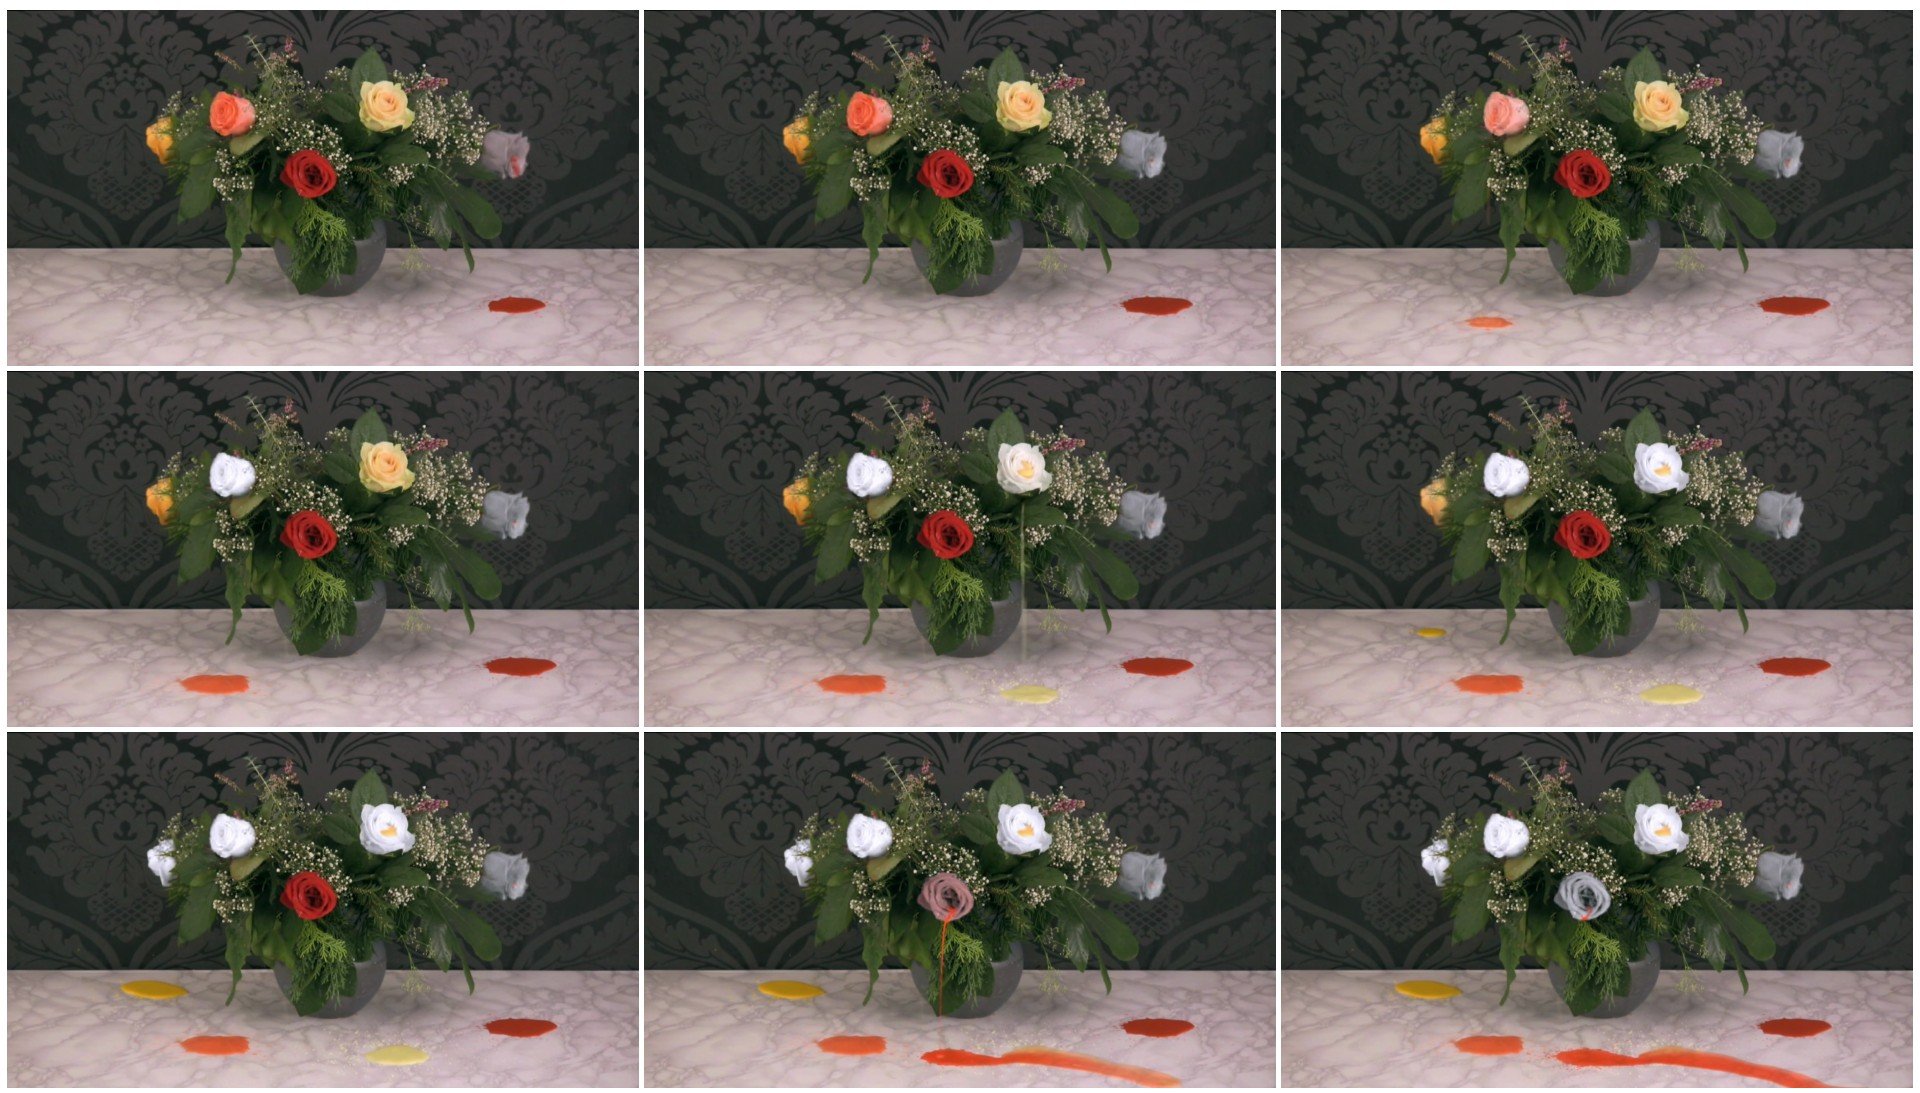 Diaana Keller & Peeter Rizmayer, 'Still Life with Flowers,' 2009, video. (Courtesy of Arter)